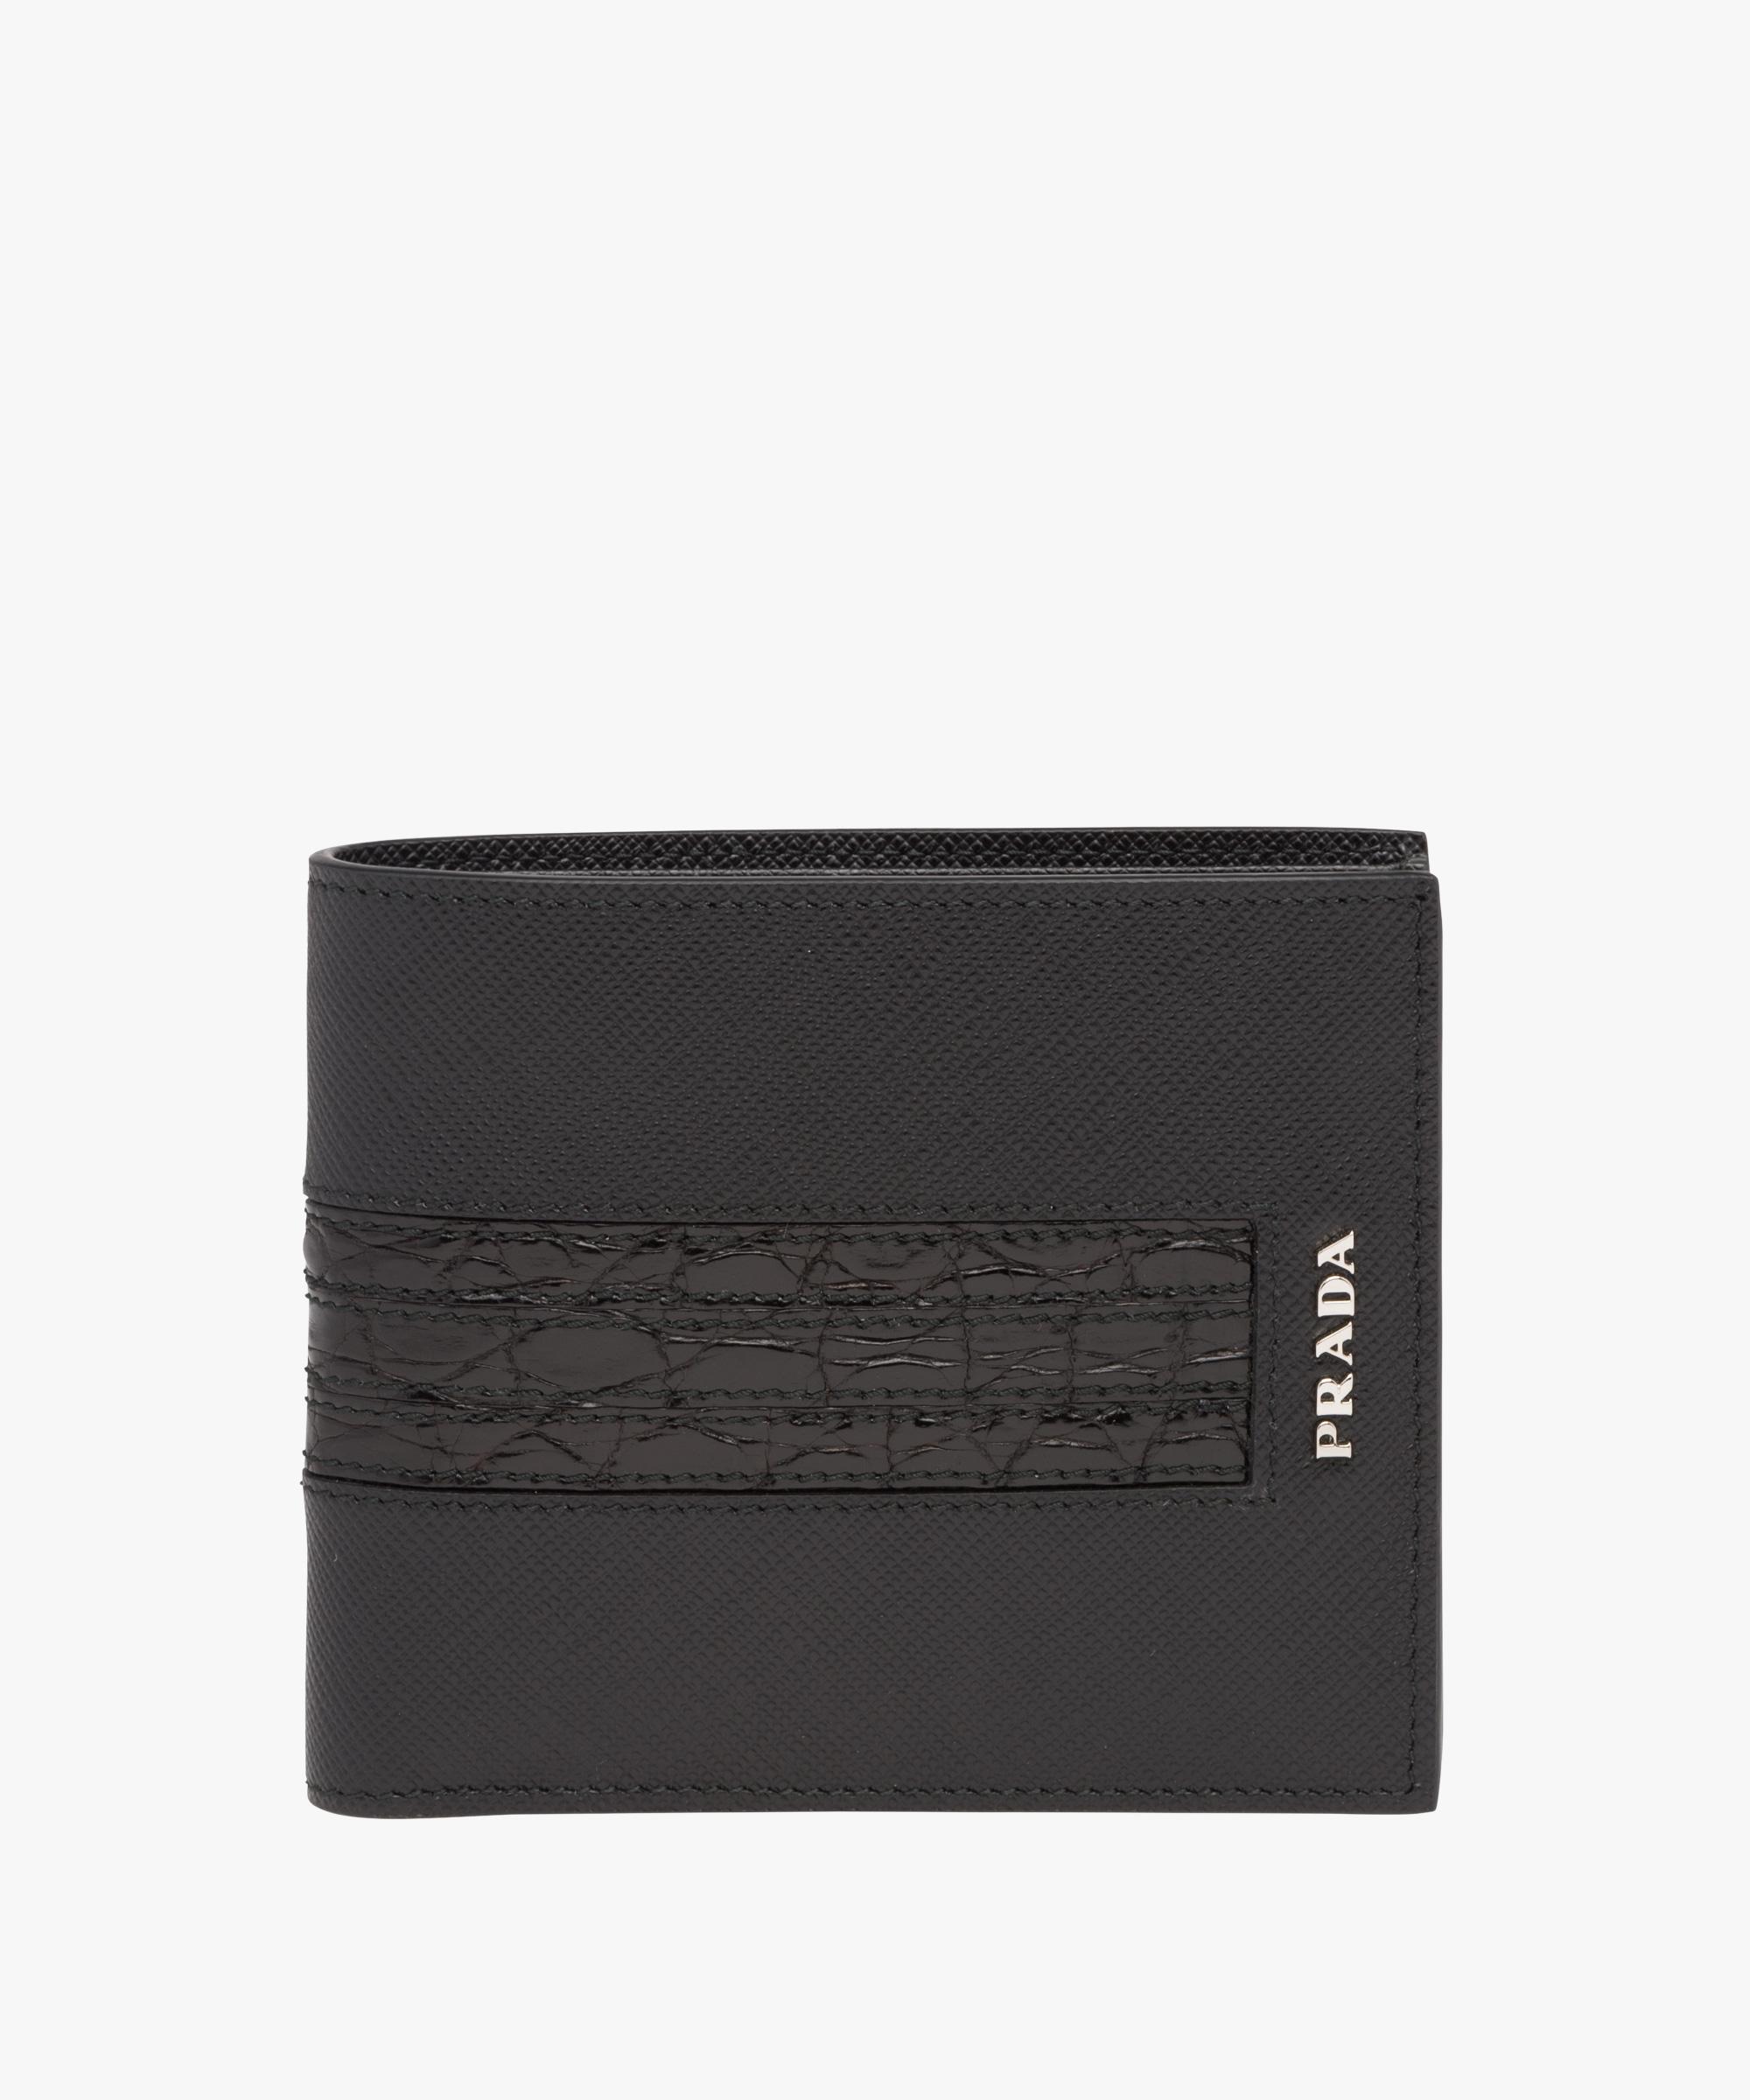 salesman He Colleague Prada Saffiano And Crocodile Leather Wallet in Black for Men | Lyst